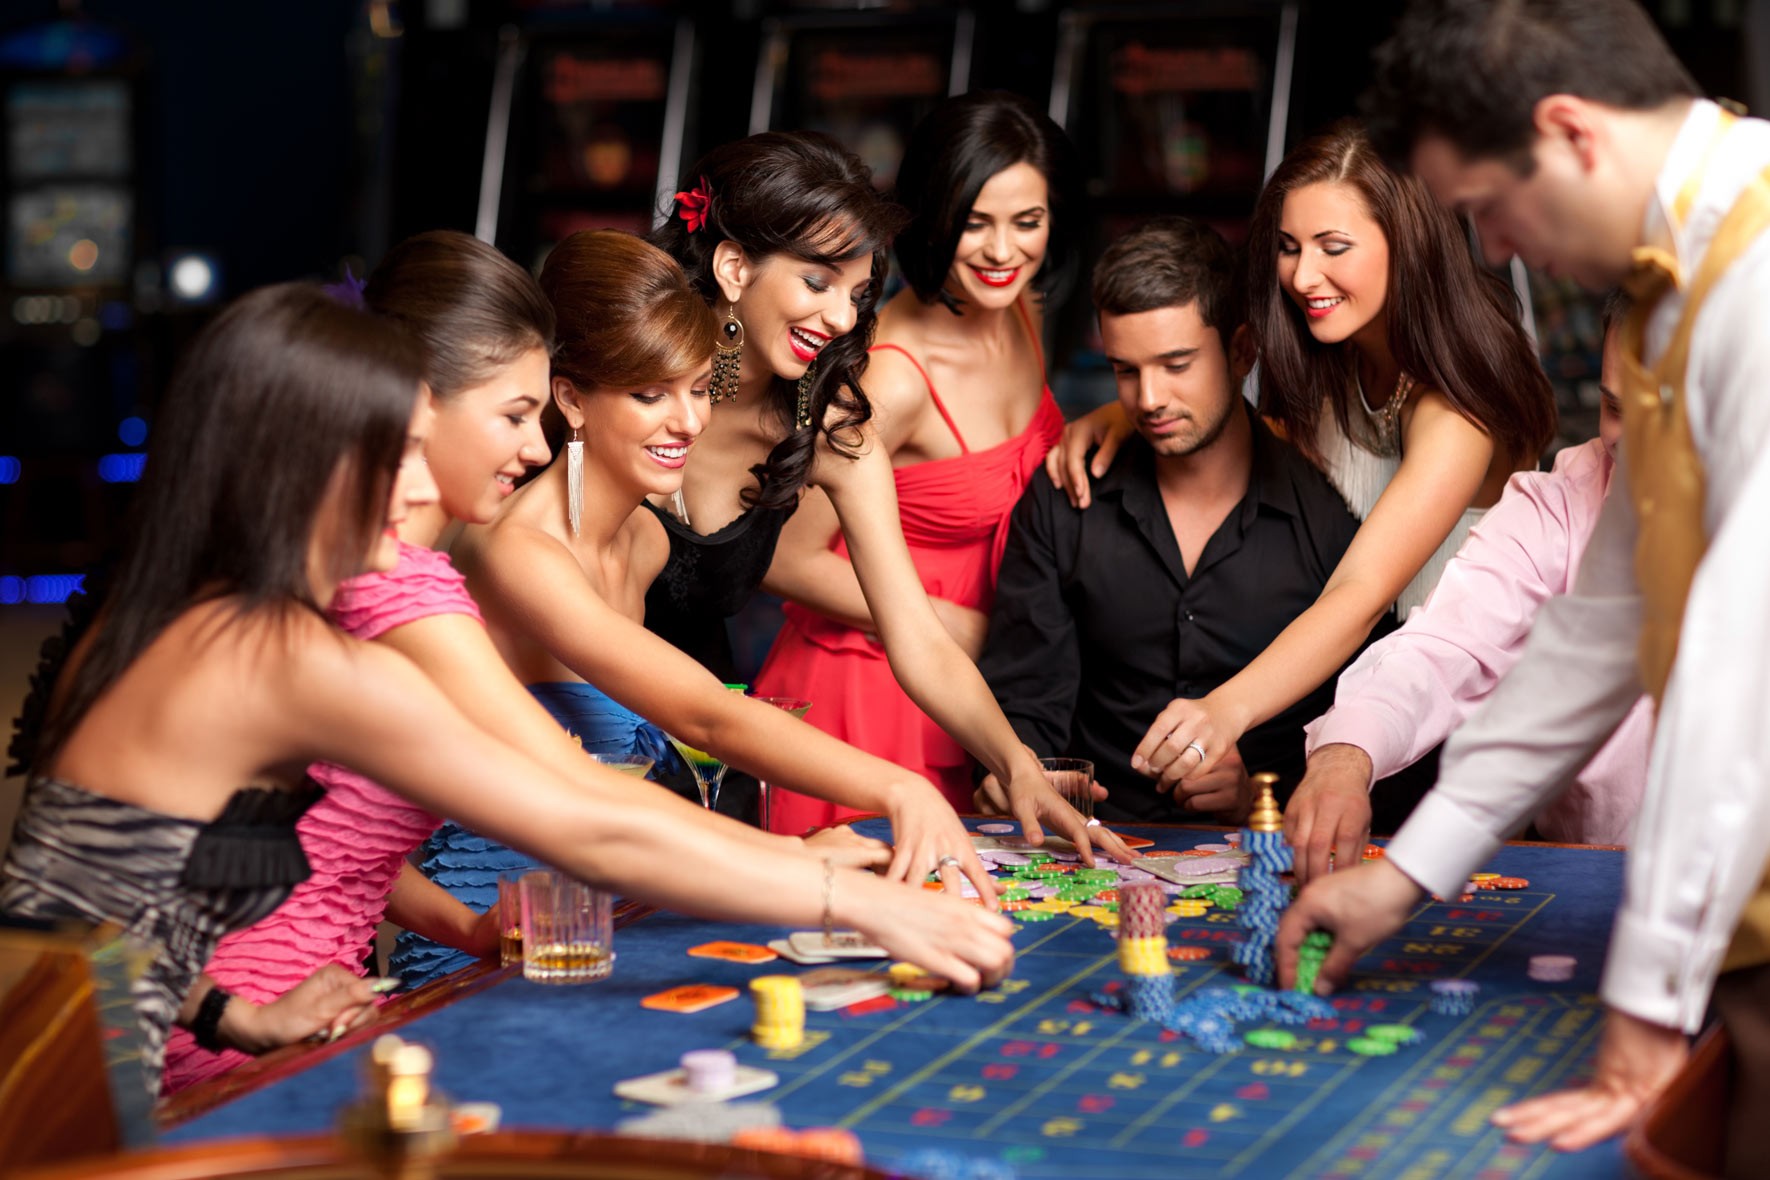 Casino Theme Night - Casino Tables